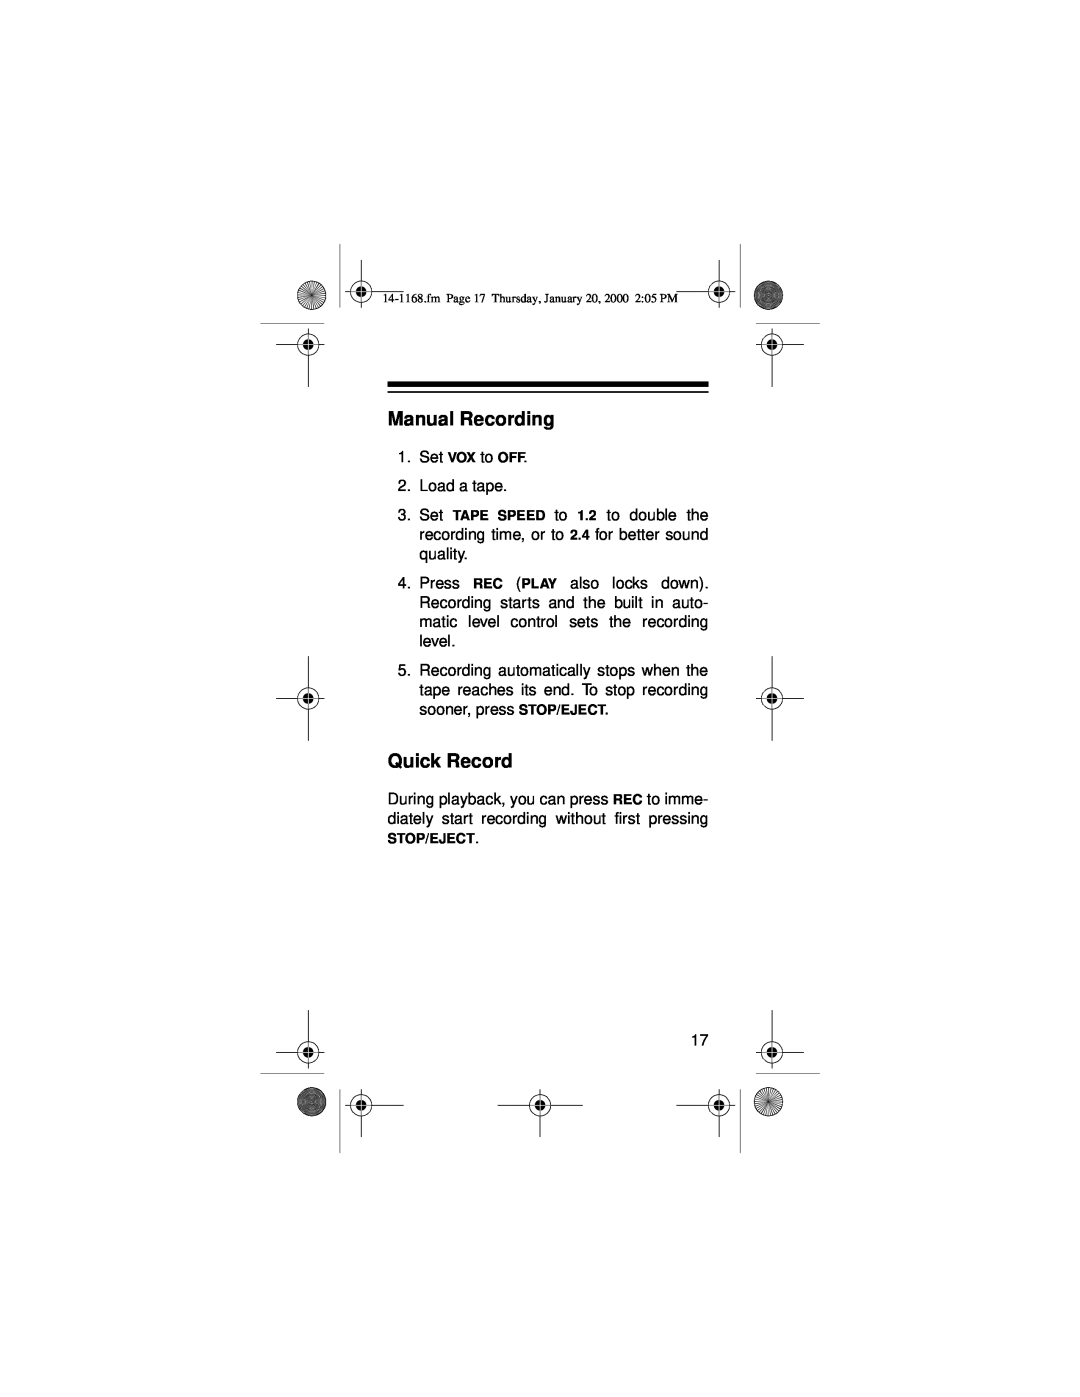 Optimus Micro-40, 14-1168 owner manual Manual Recording, Quick Record 